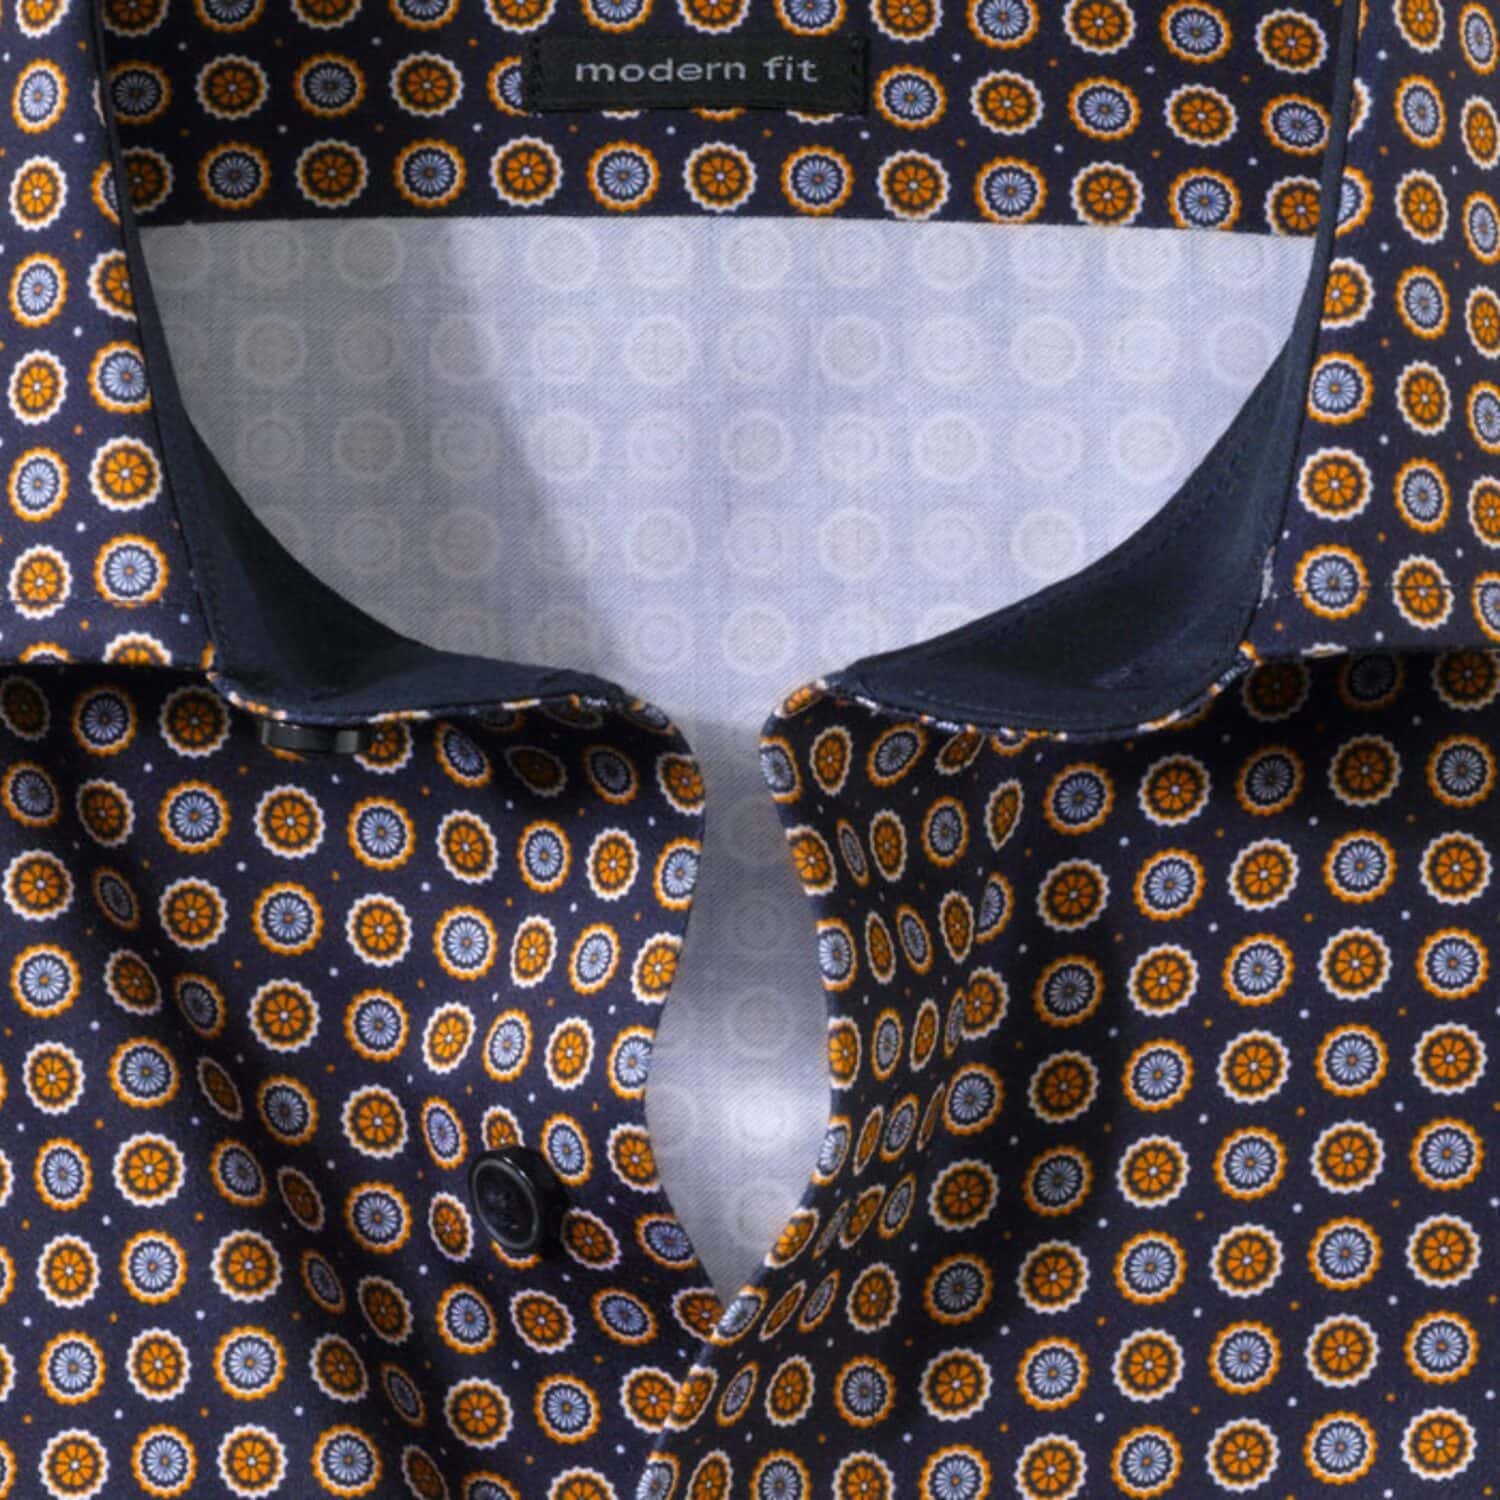 Olymp Luxor Skjorte Maize Dots